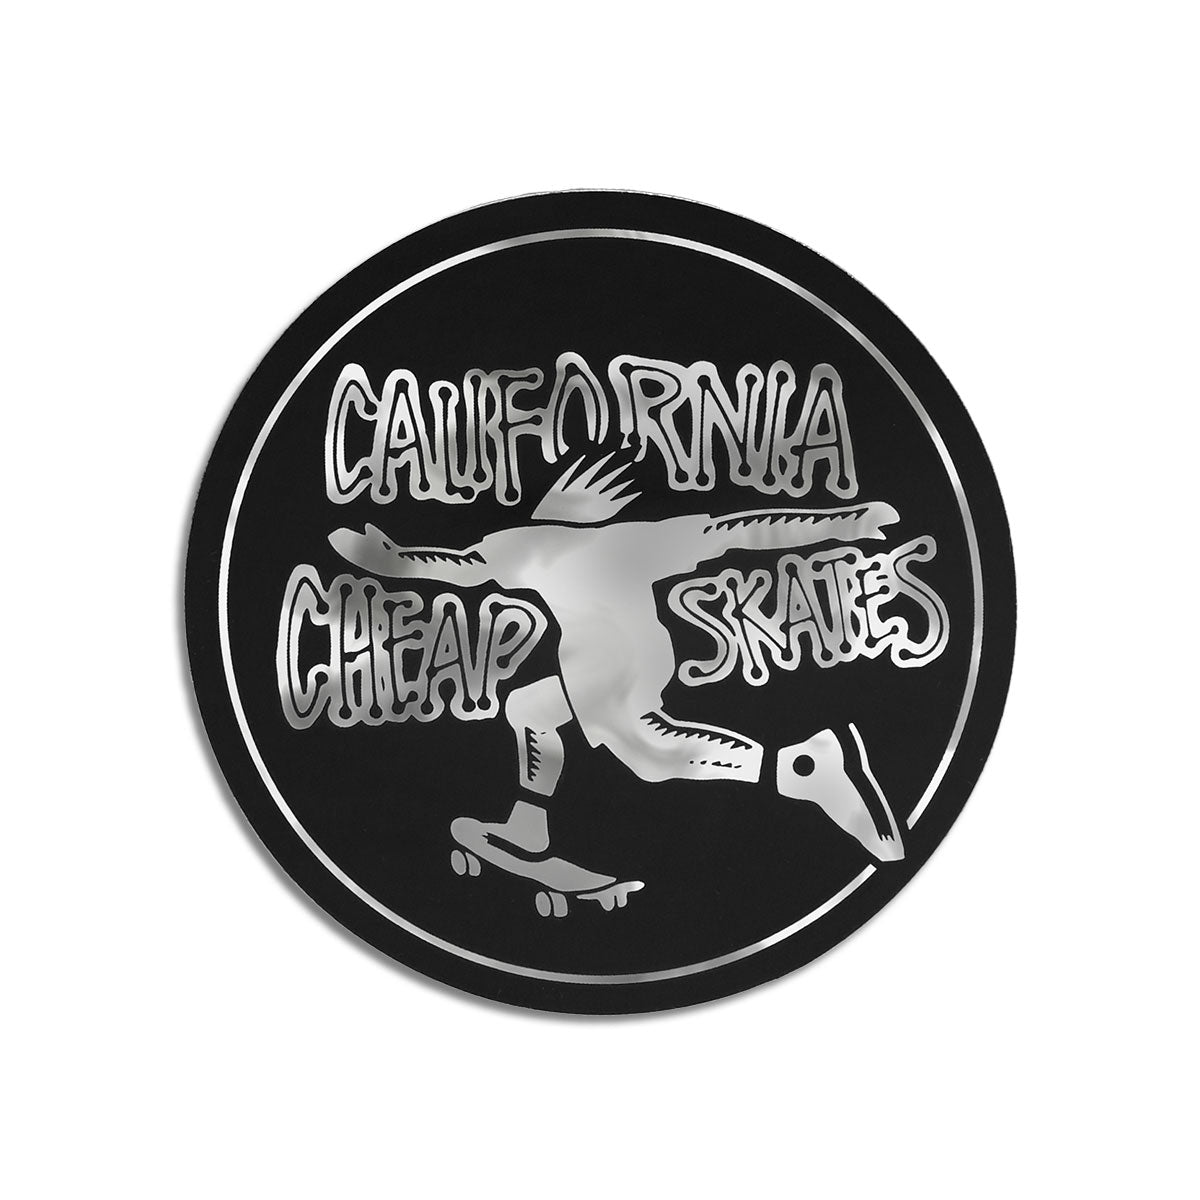 CCS Cheap Skates Sticker - Black/Chrome image 1